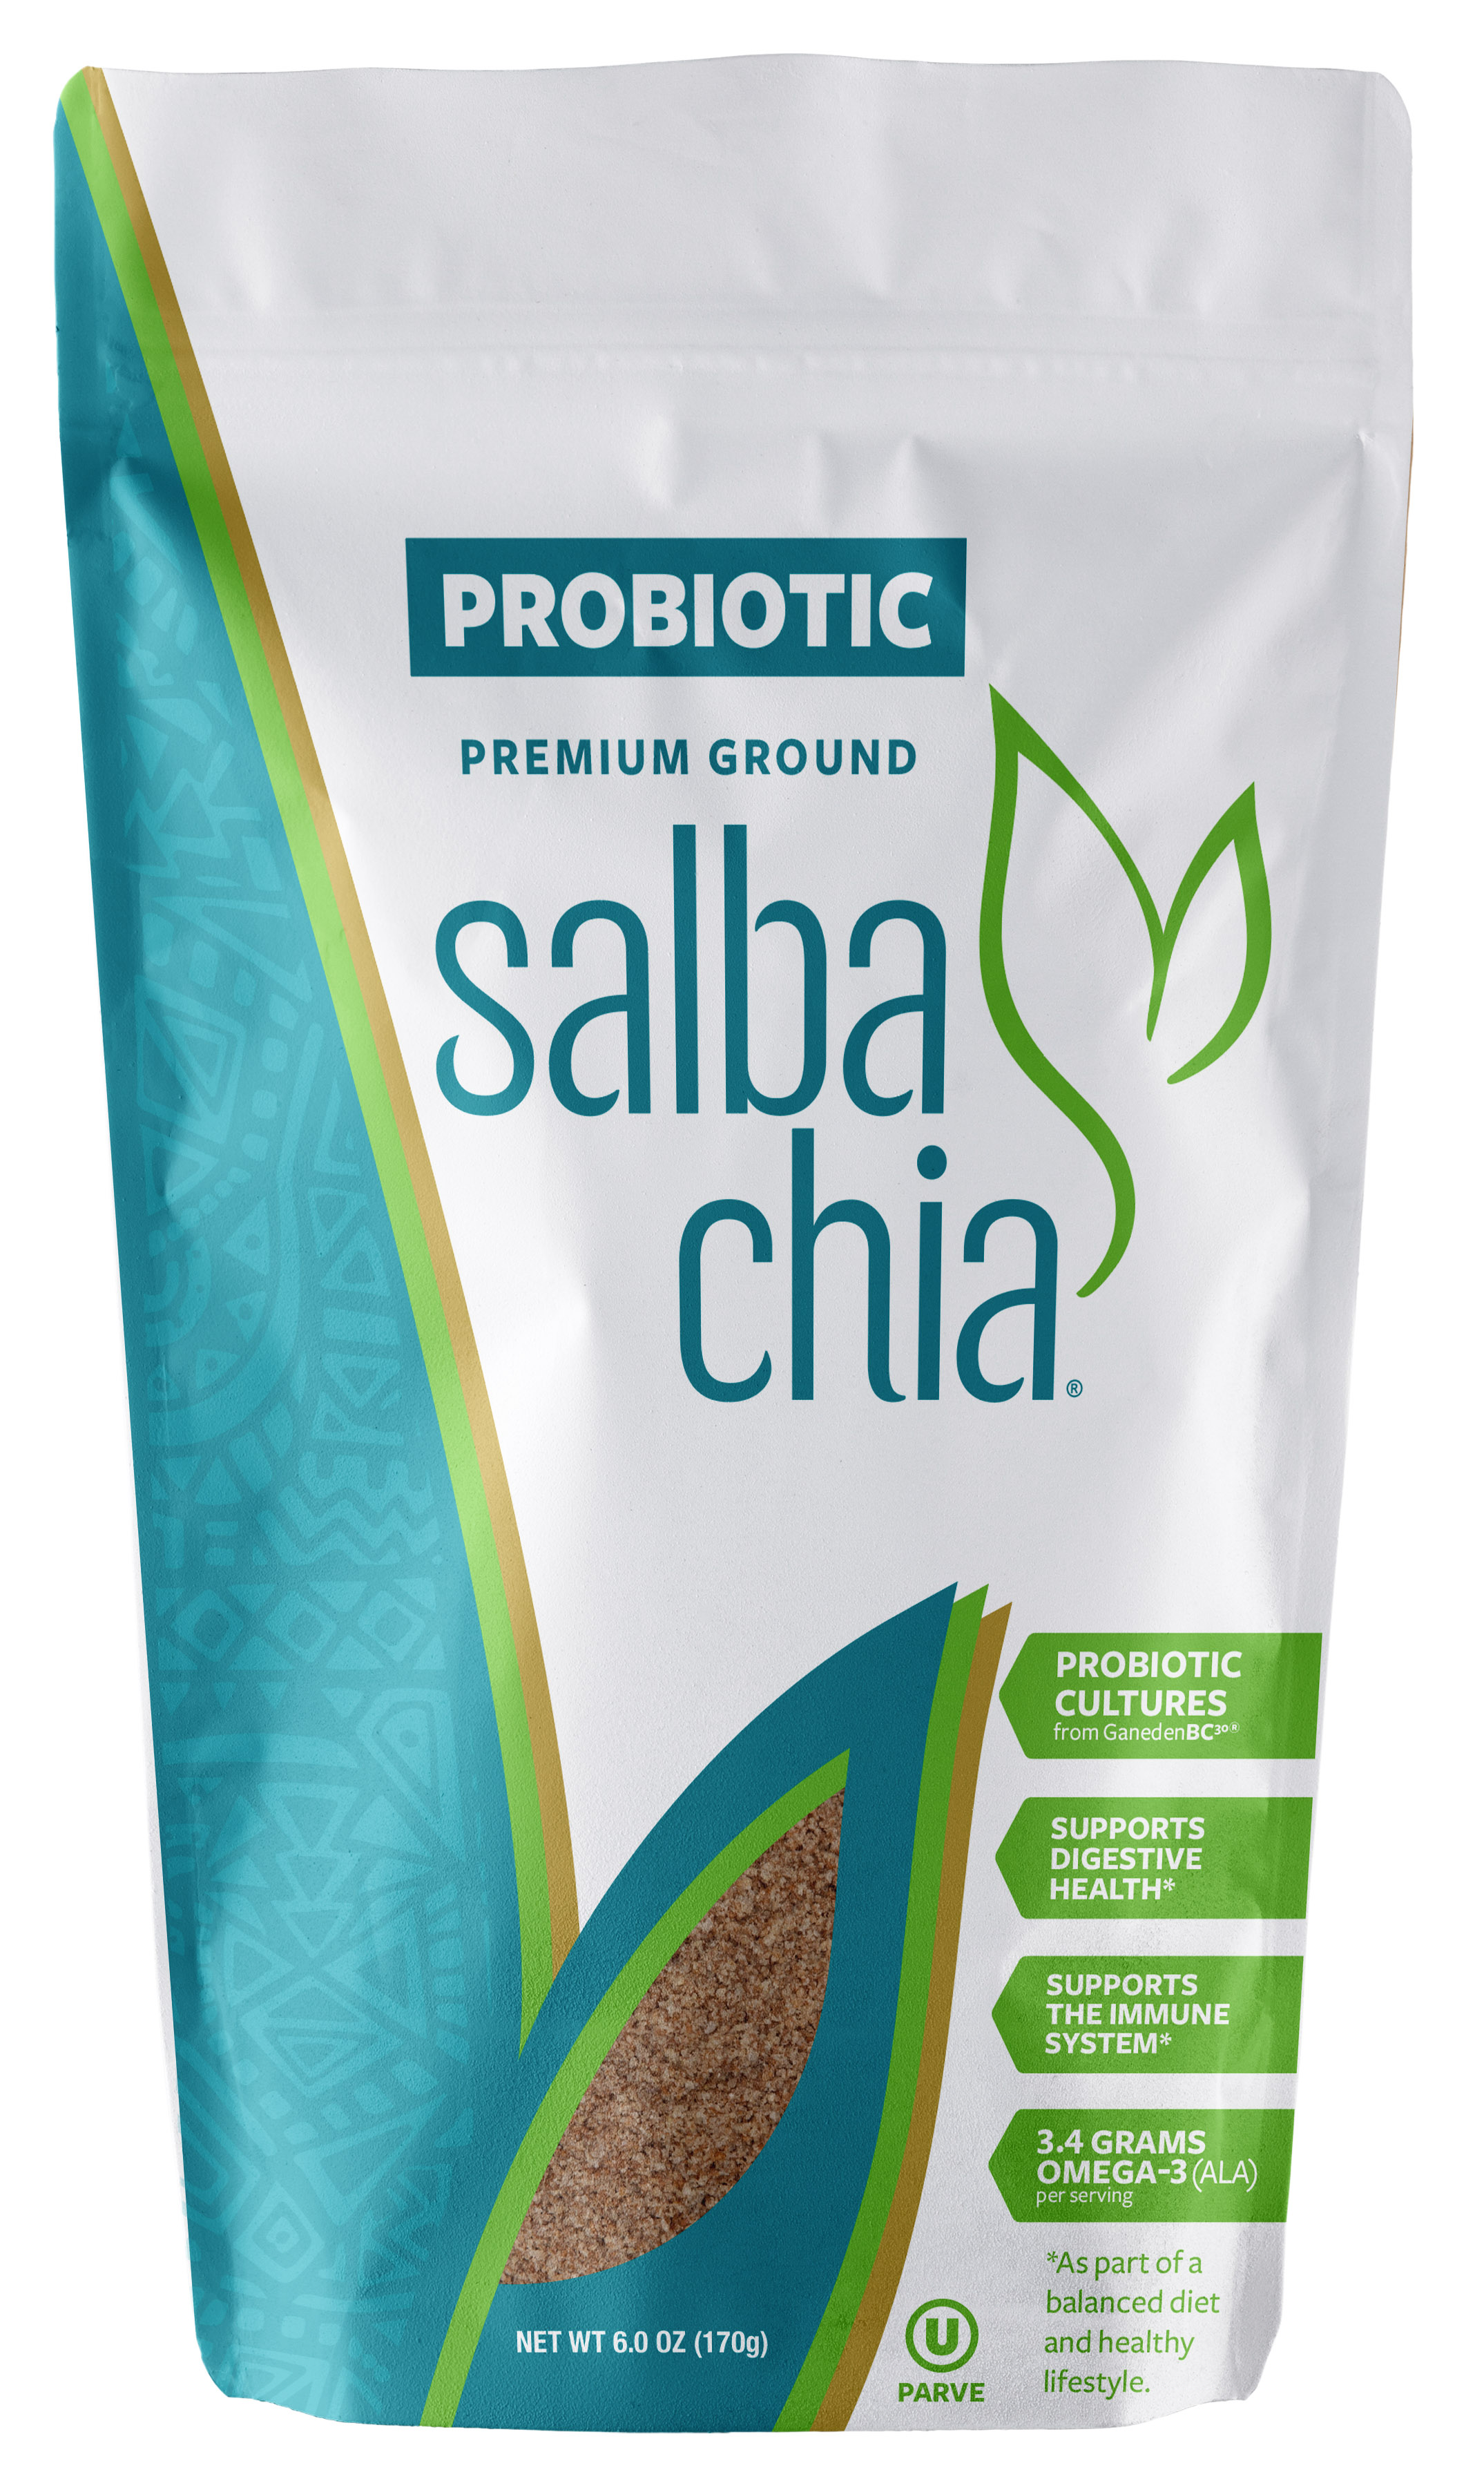 Premium Ground Salba Chia with Probiotic